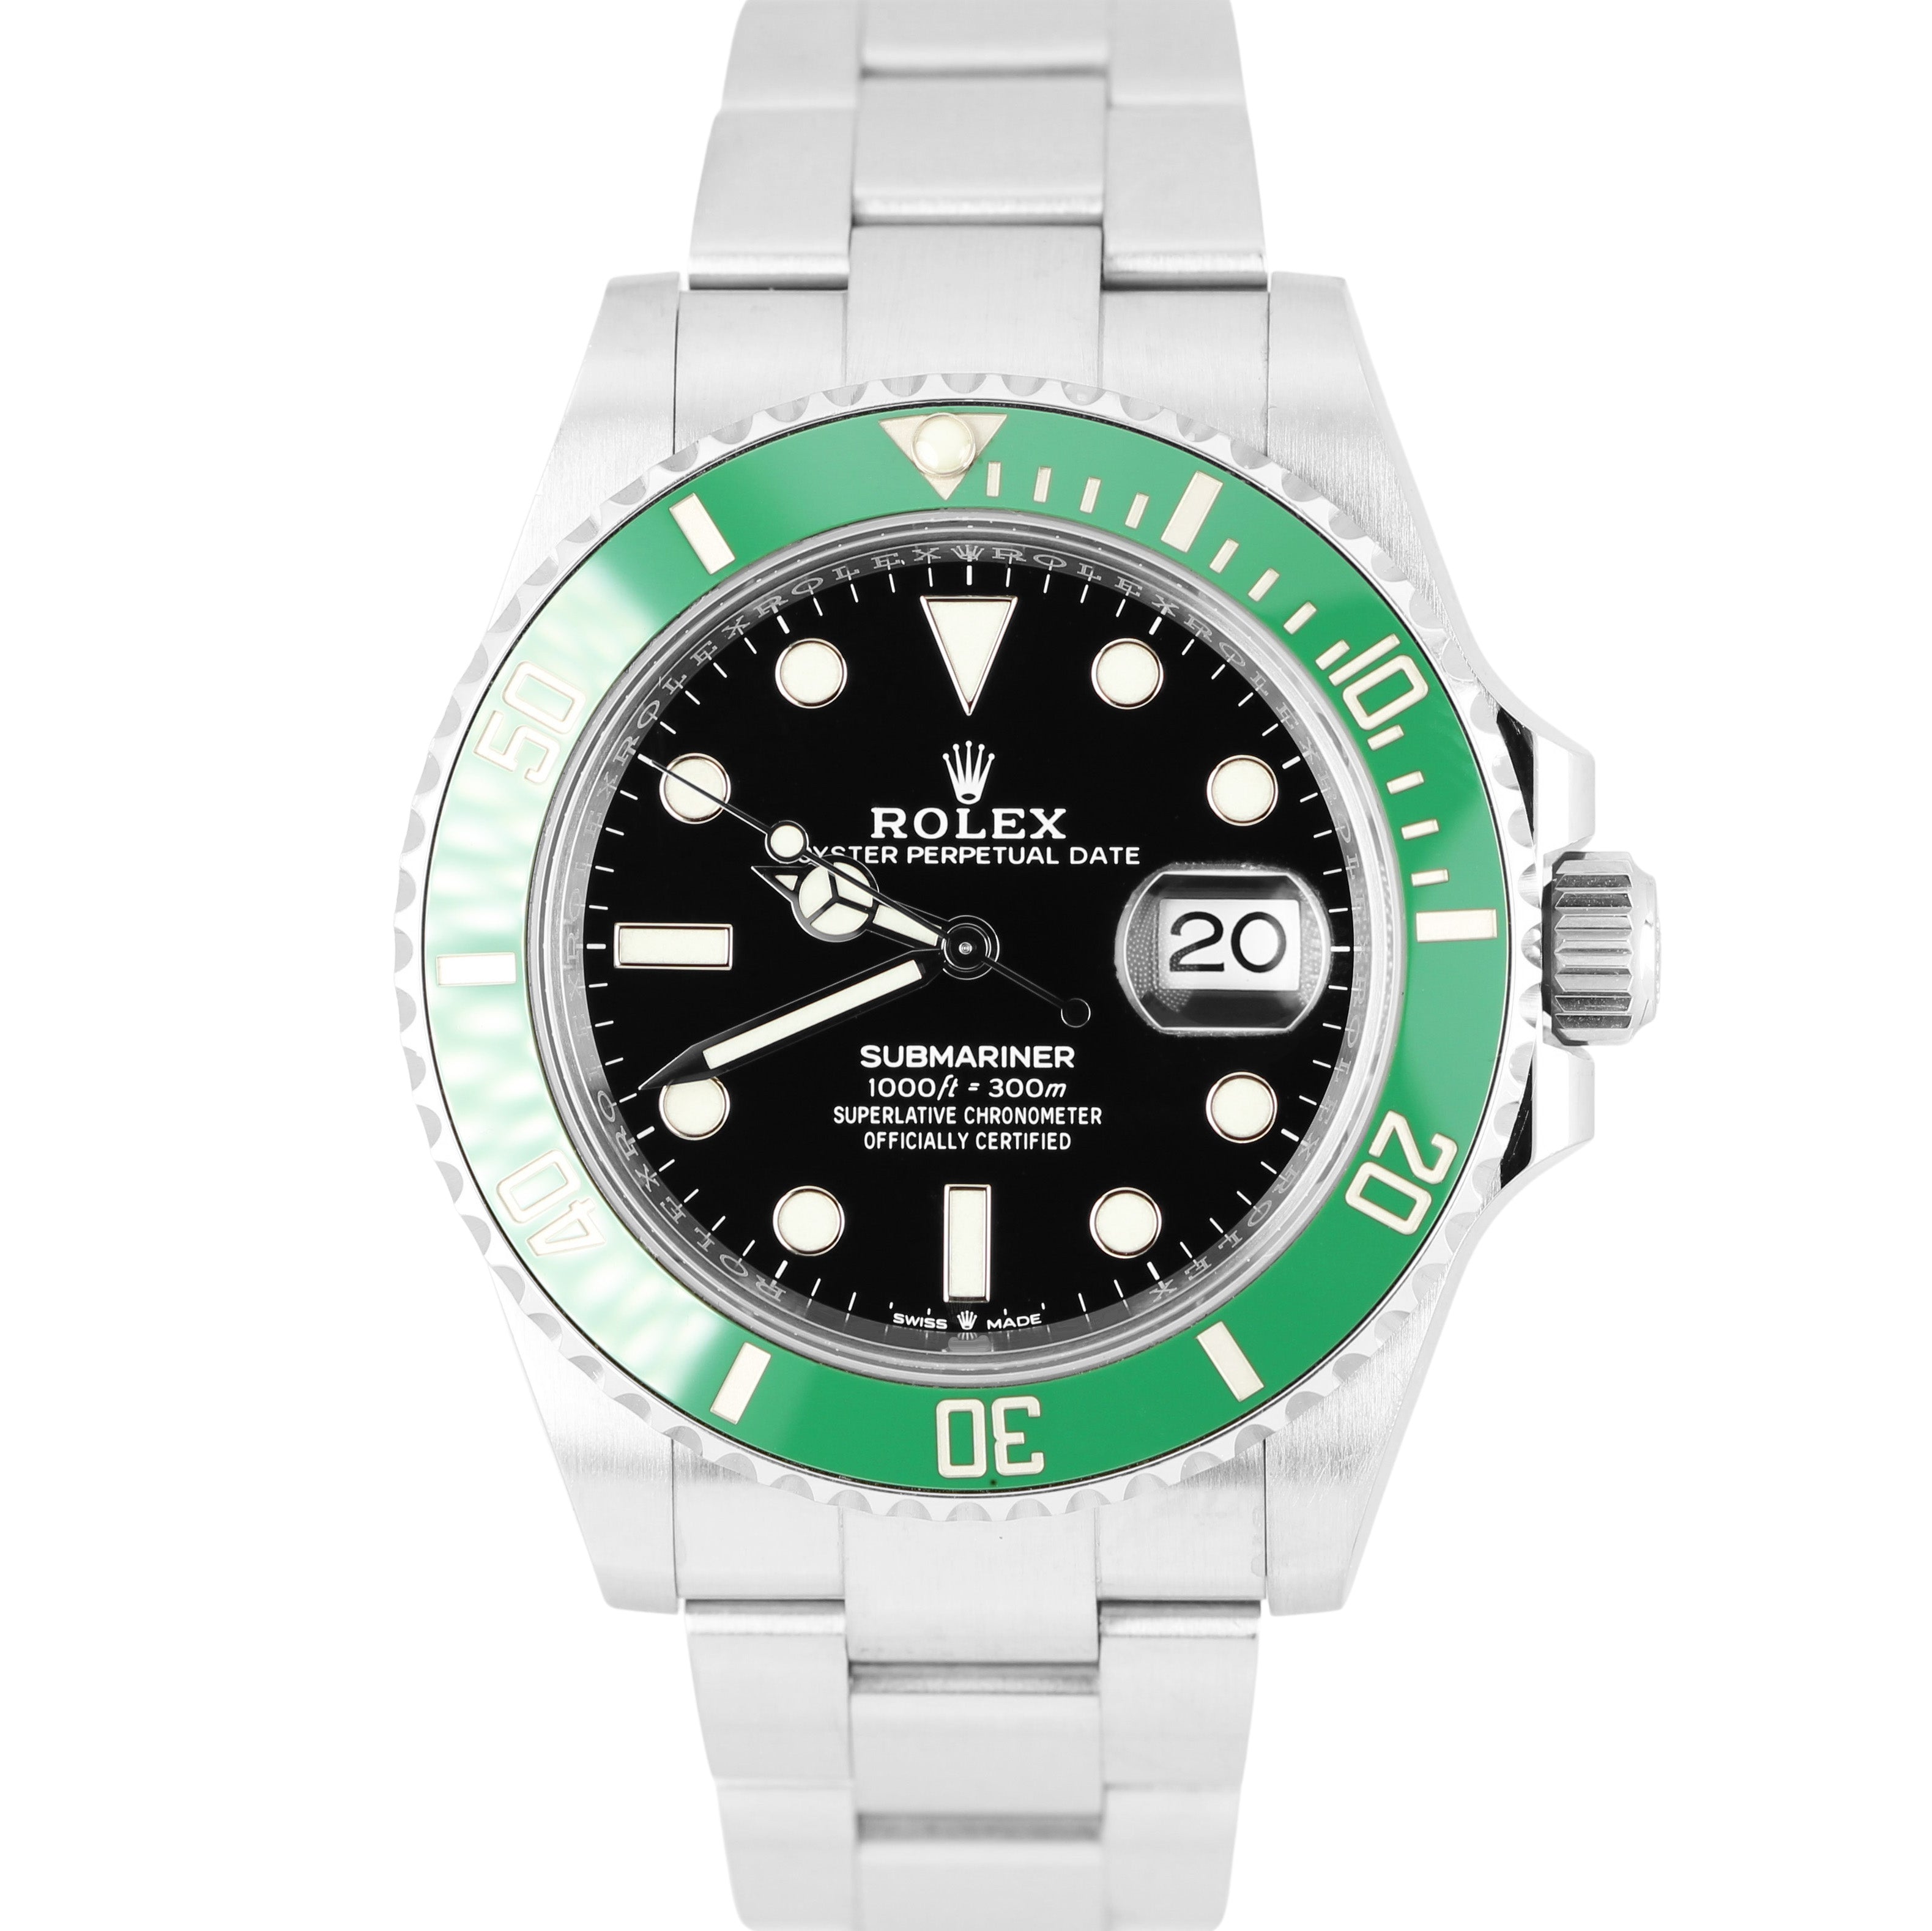 Rolex 126610LV Kermit Green Bezel Black Dial Submariner Date Stainless Steel